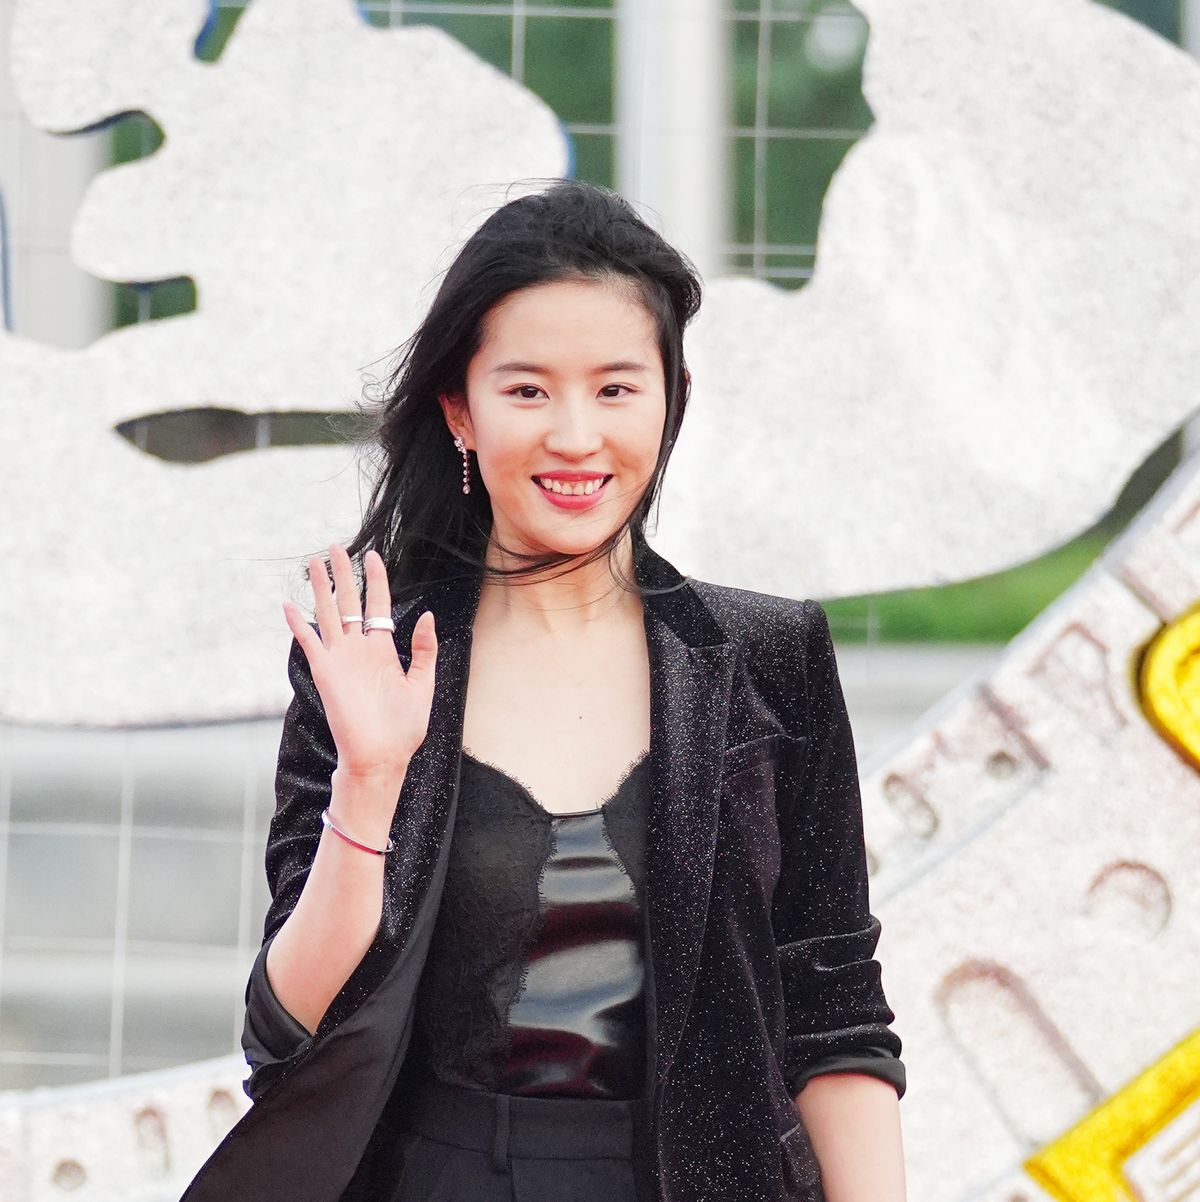 Yifei Liu Xnxx - Who Is Liu Yifei, the Actress Playing 'Mulan' in Disney's Film - Crystal Liu  and #BoycottMulan Protests